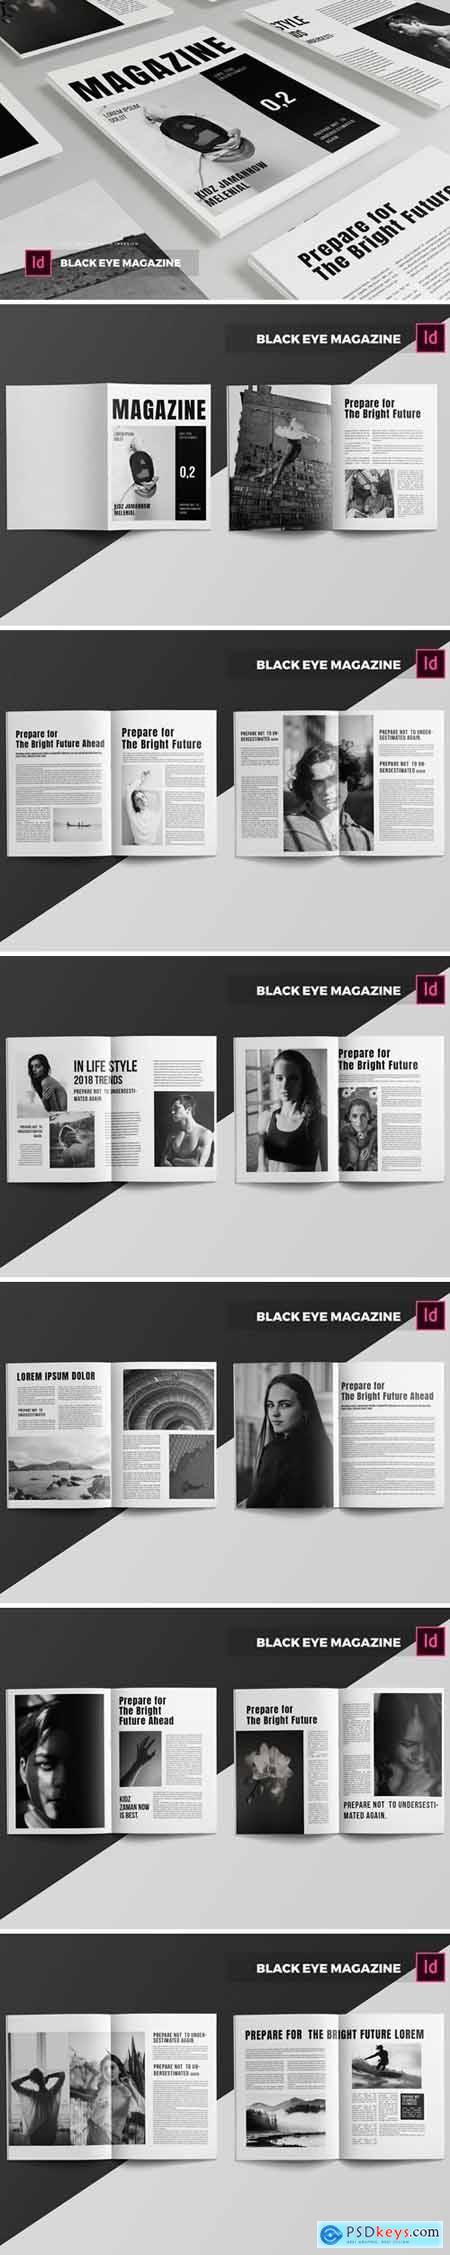 Black Eye Magazine Template